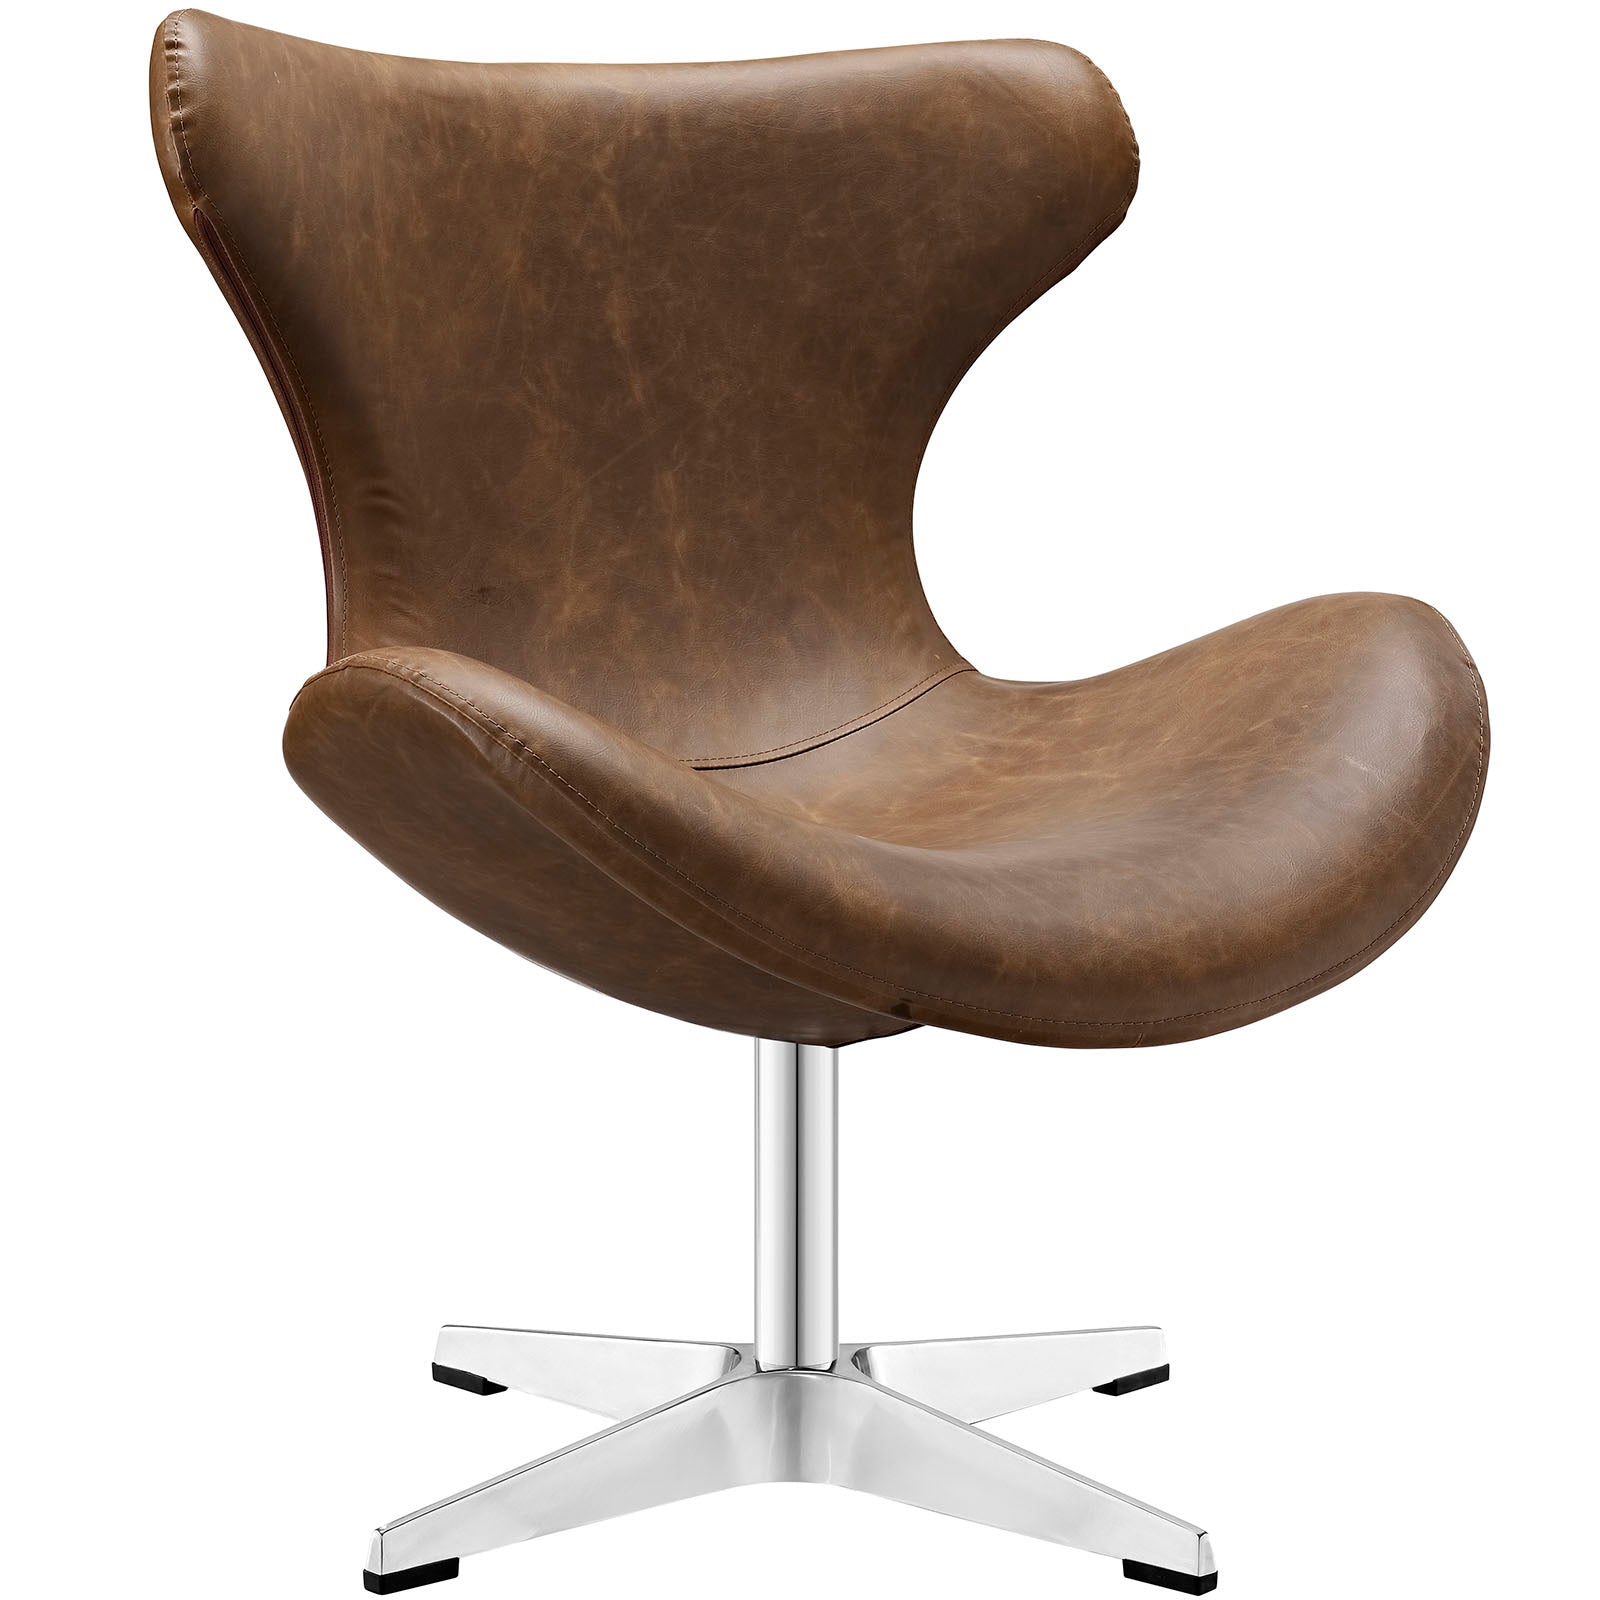 Helm Lounge Chair - East Shore Modern Home Furnishings